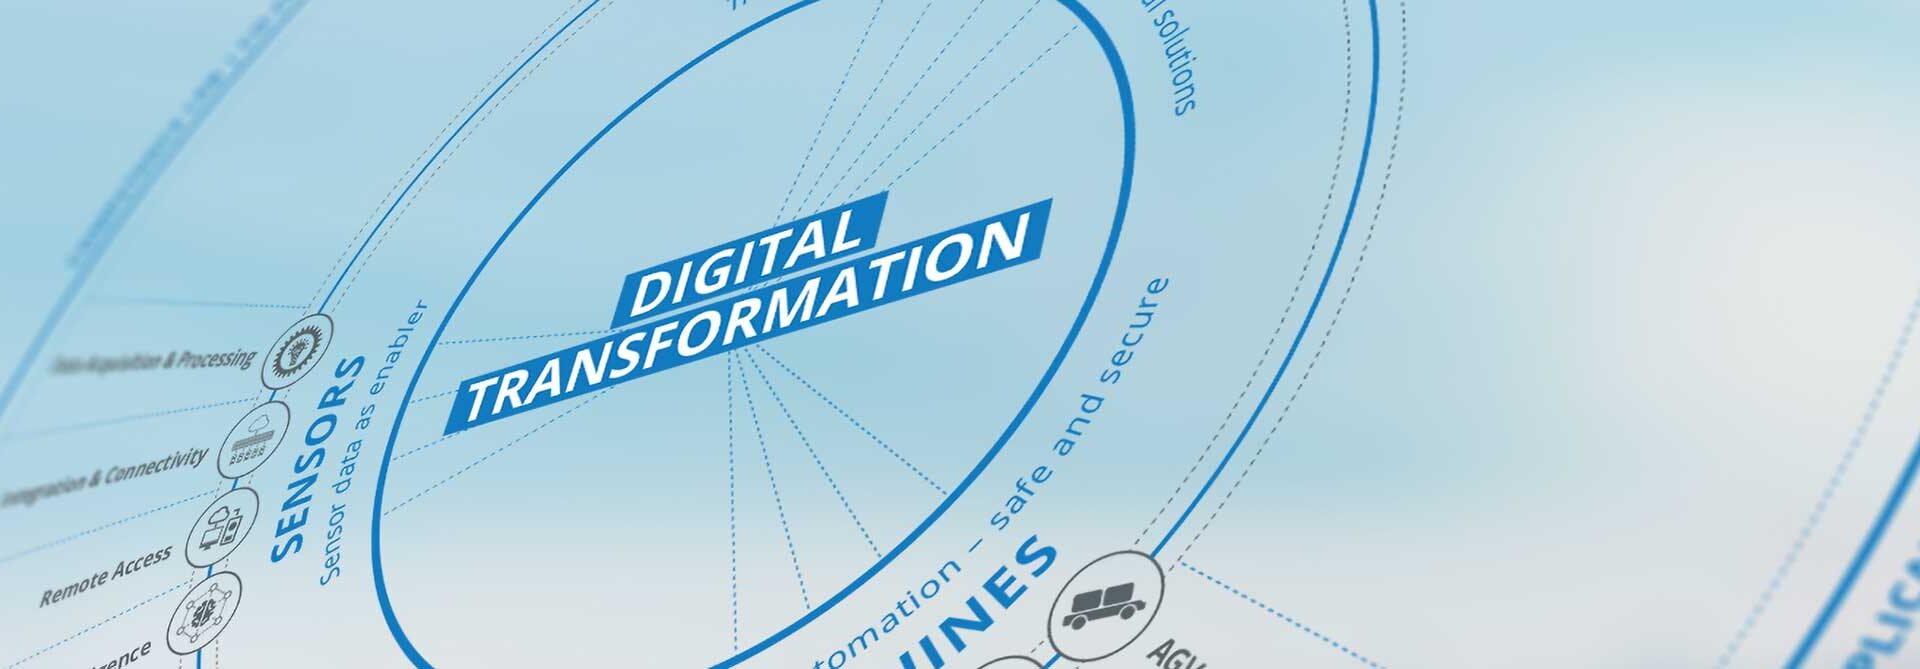 digital transformation, Start Your Digital Transformation Journey